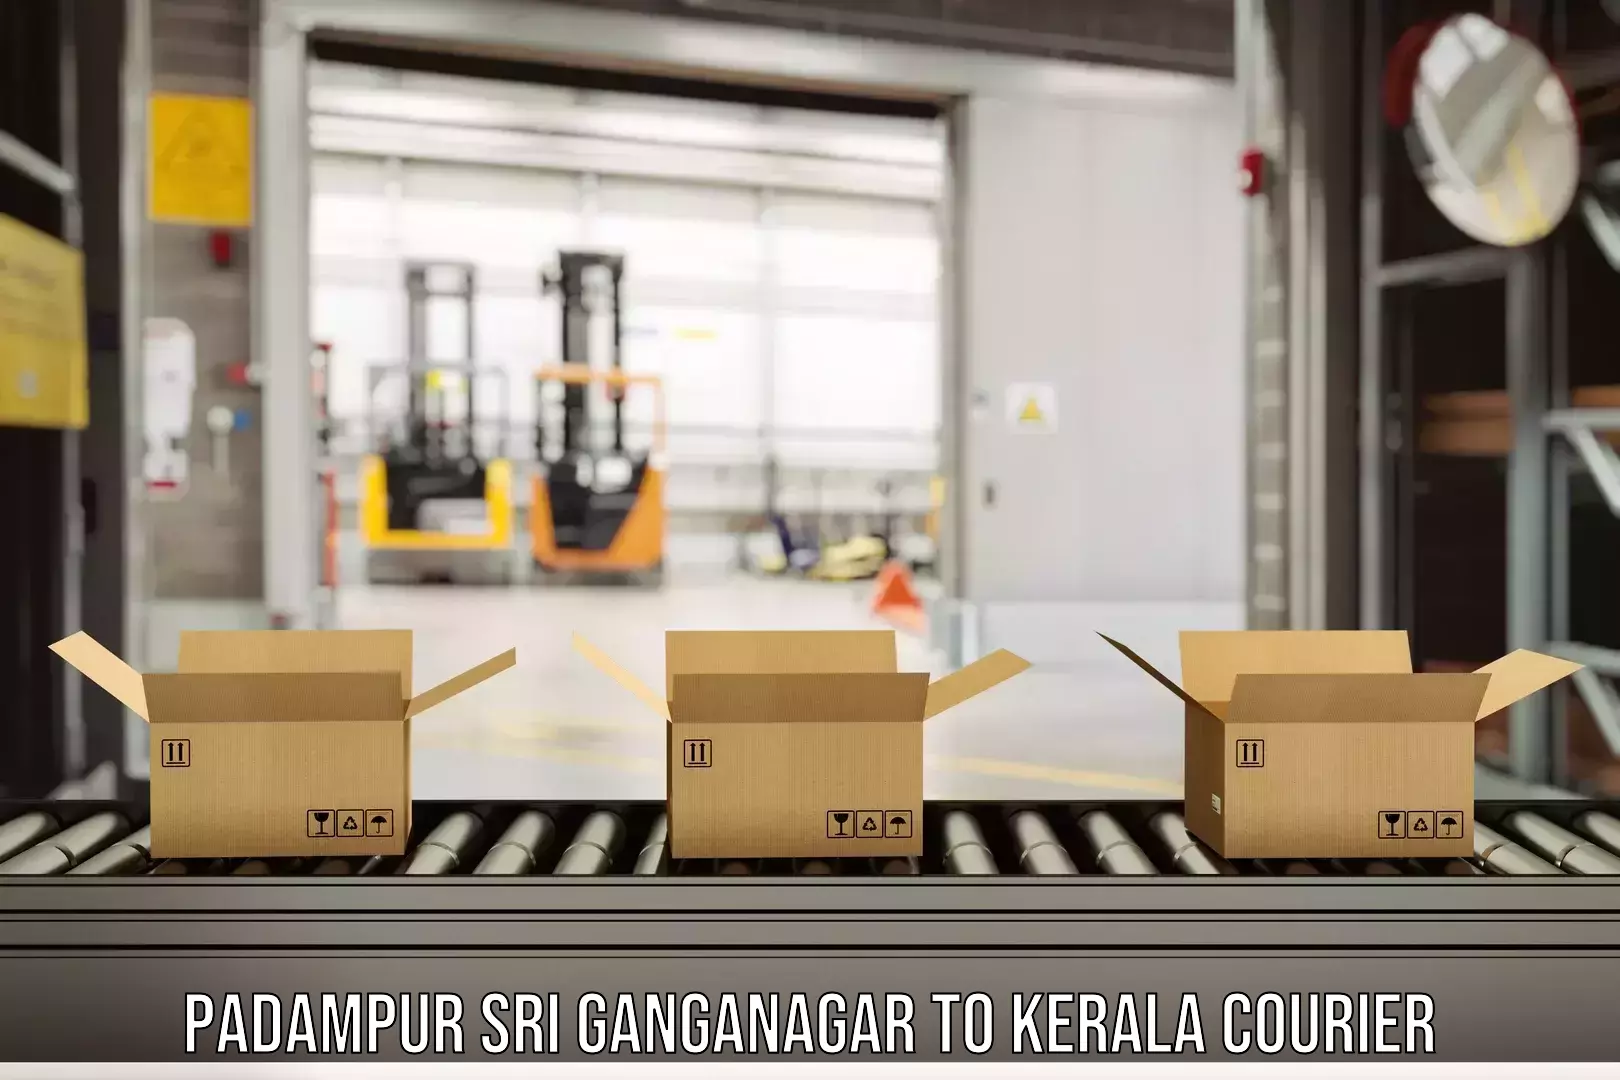 Overnight delivery services Padampur Sri Ganganagar to Kothanalloor